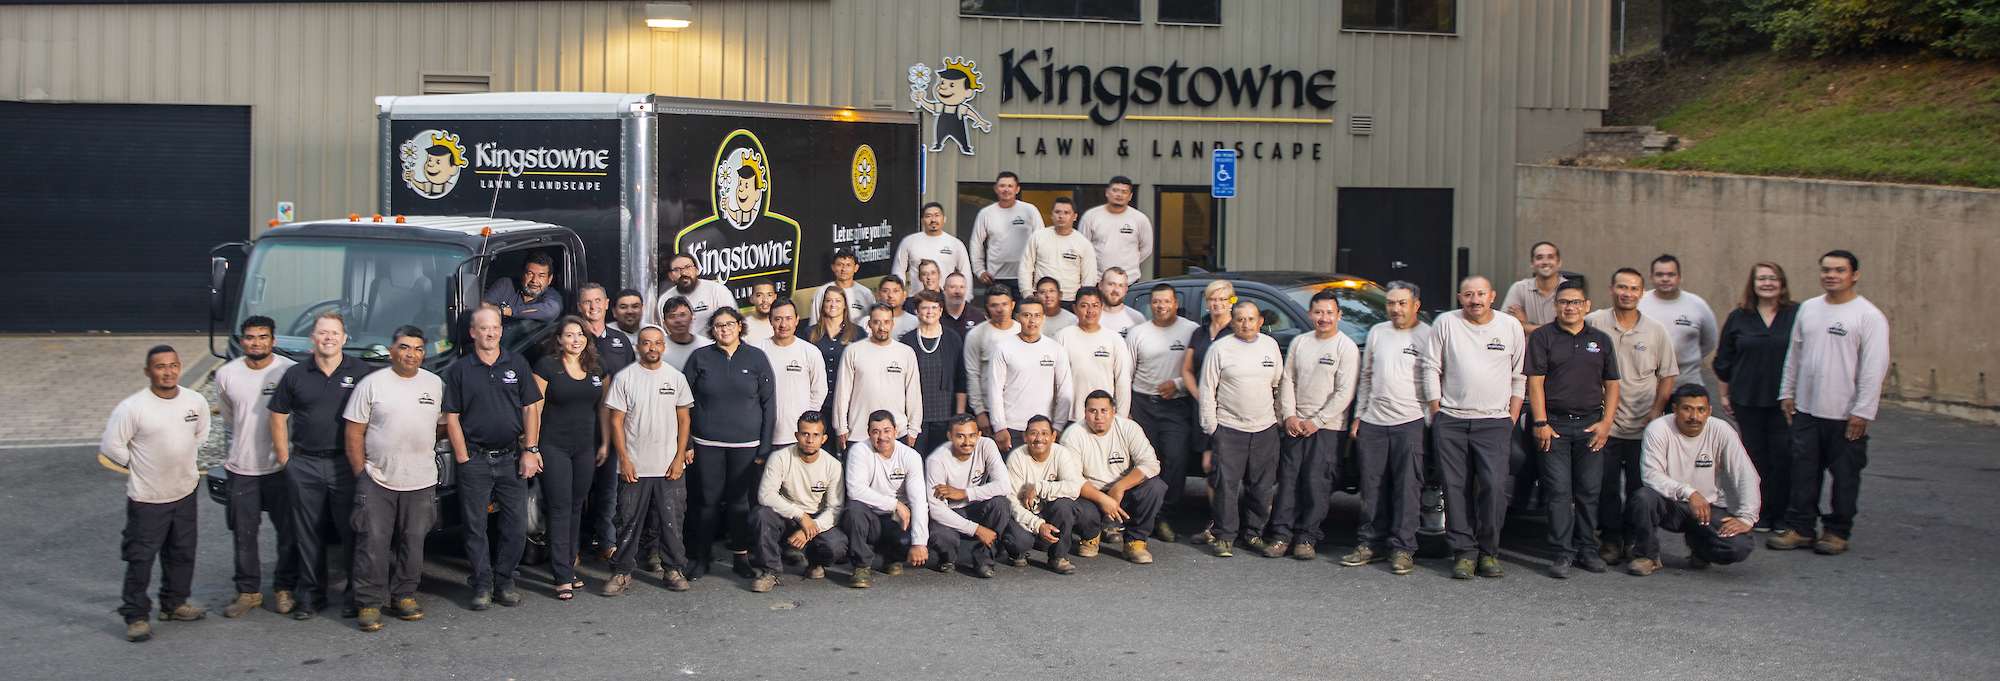 Kingstowne Team Photo